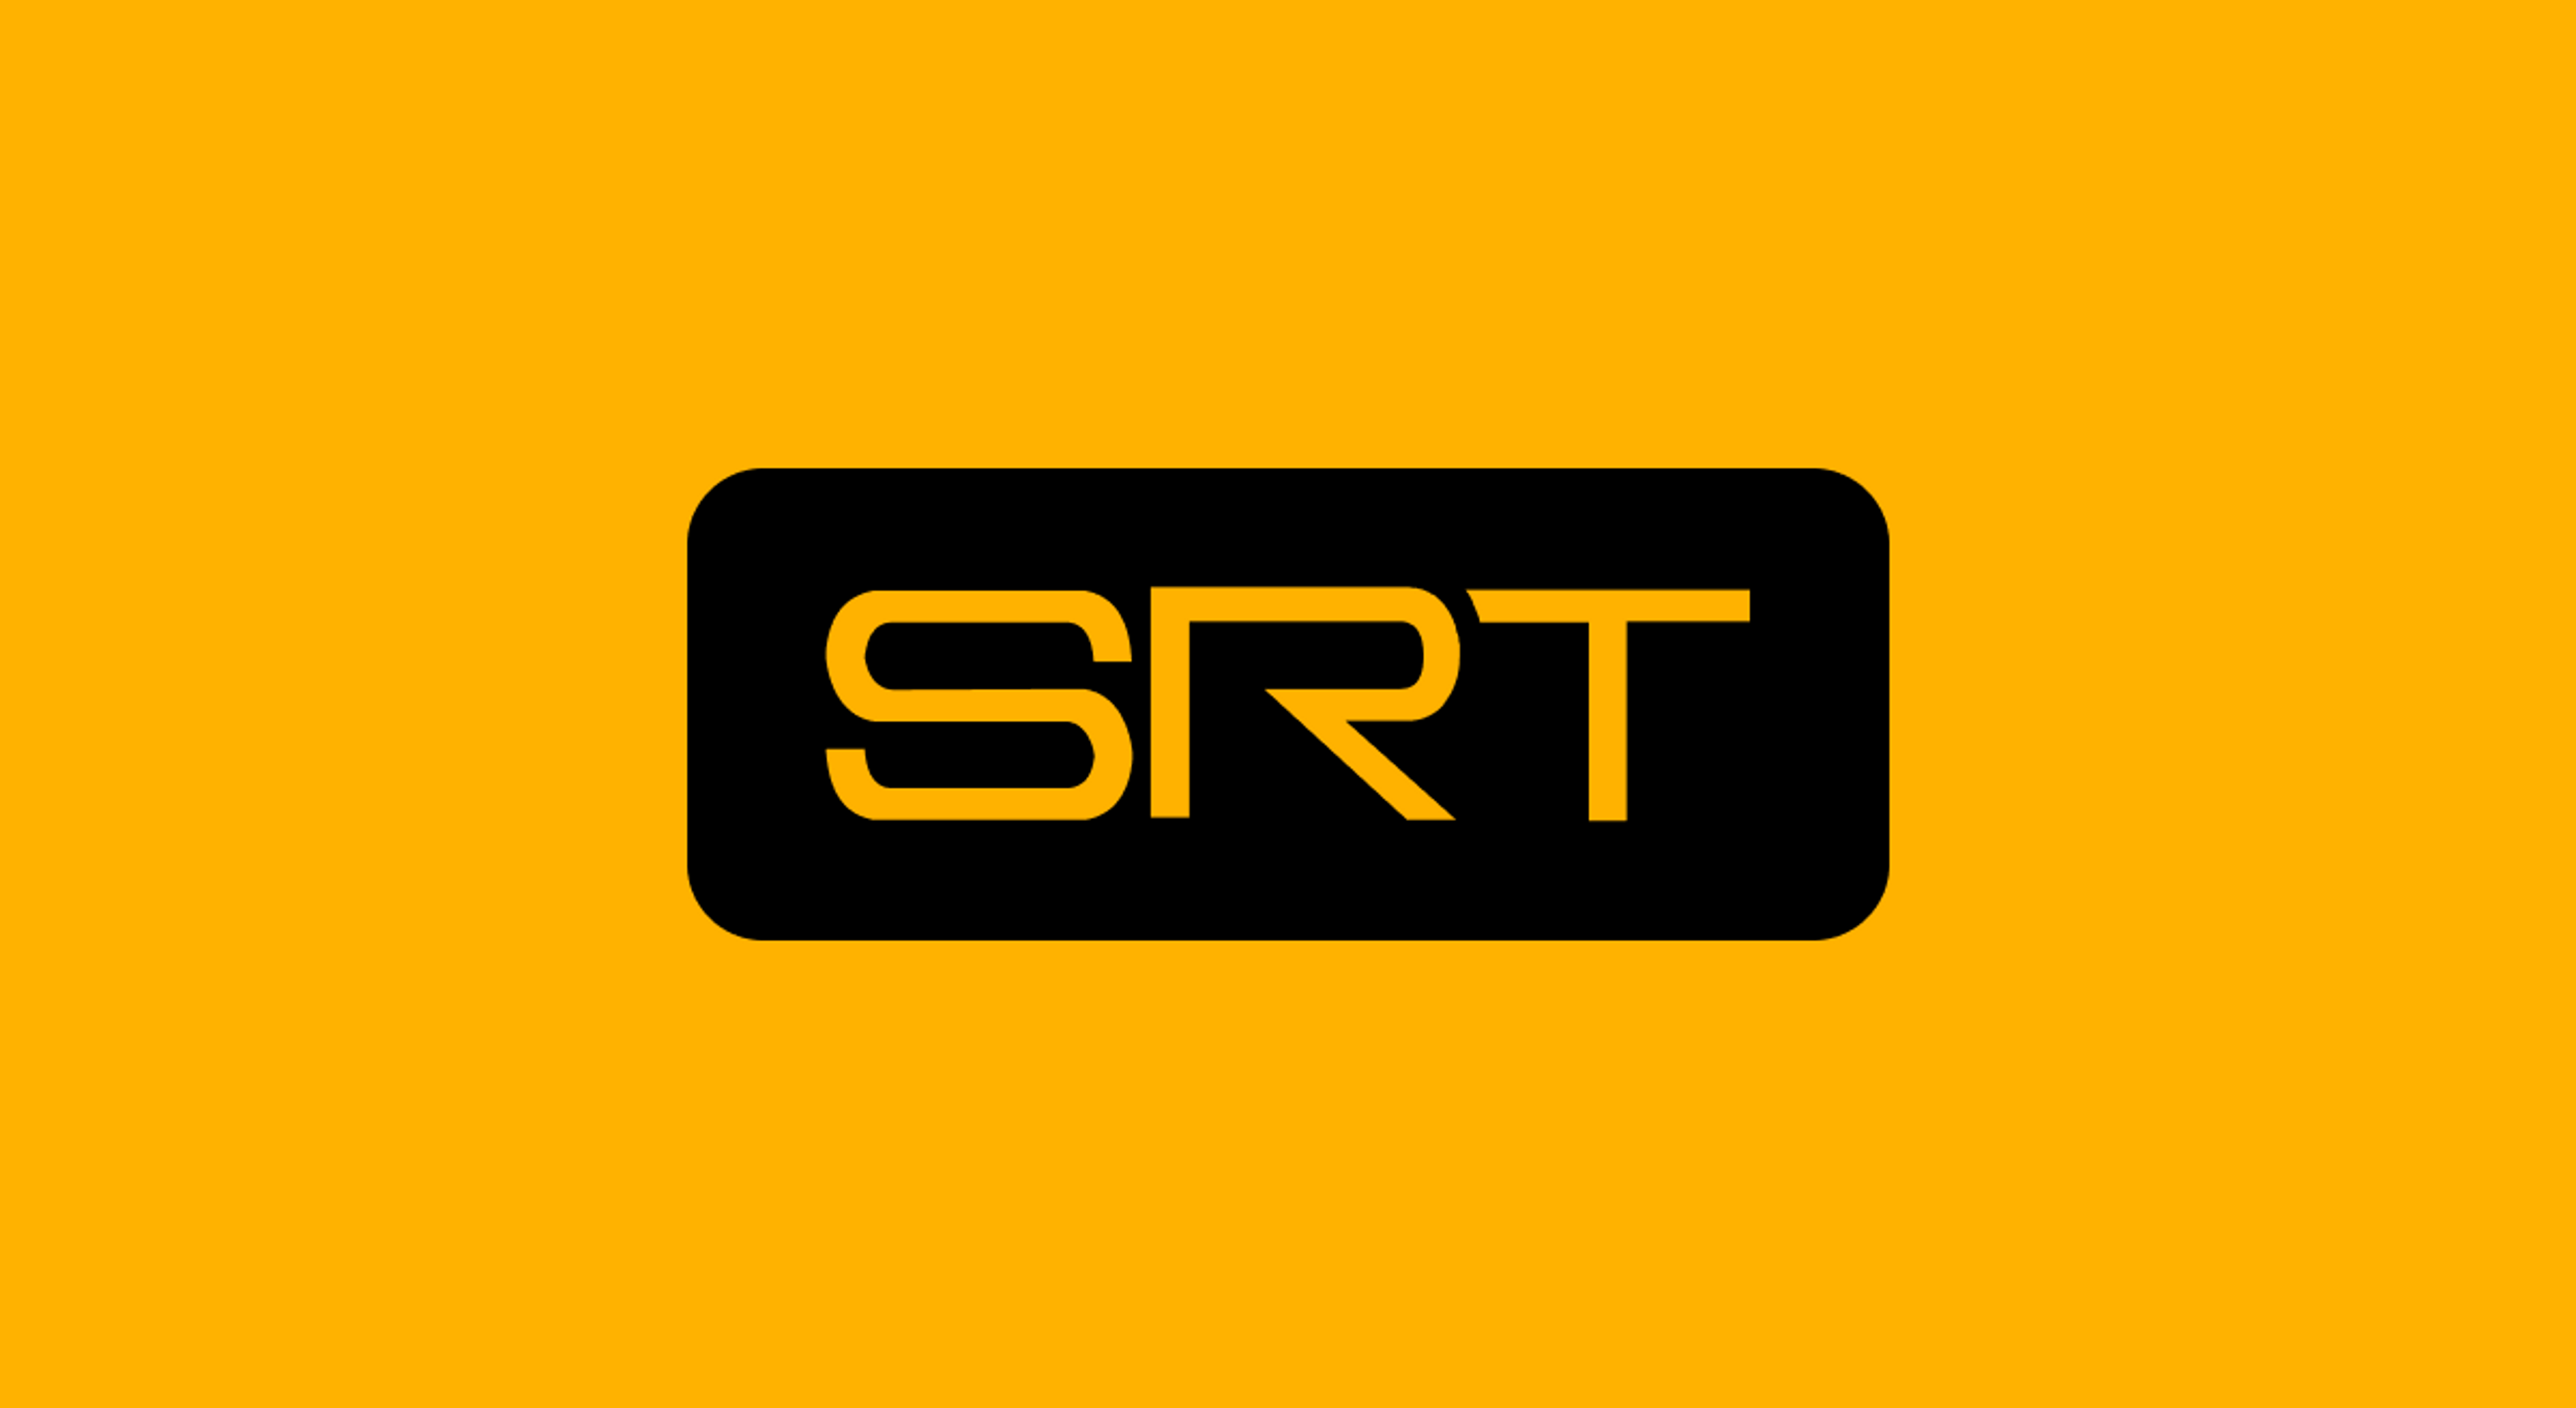 SRT logo on a yellow background